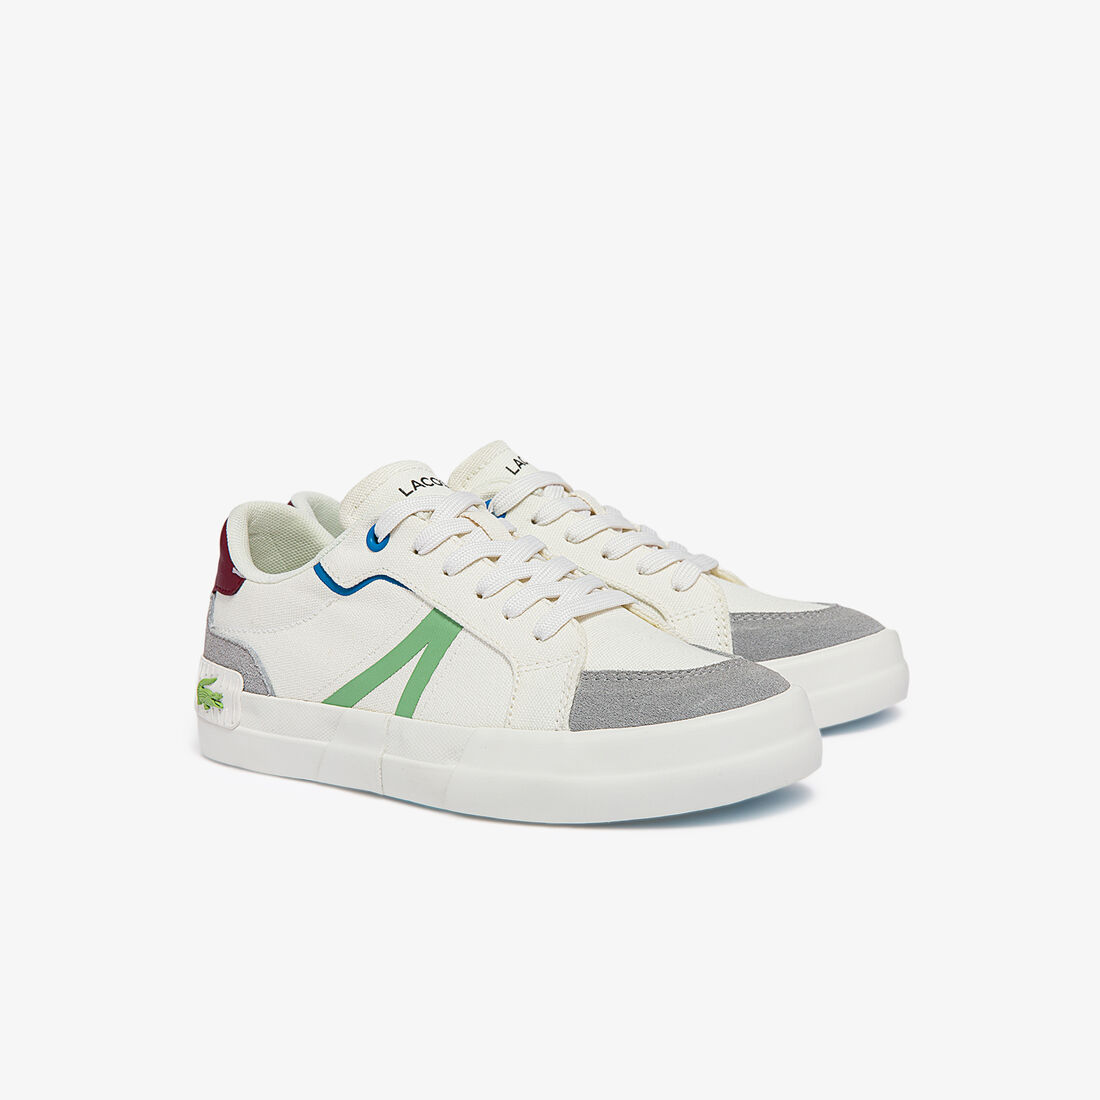 Lacoste L4 Canvas Sneakers Damen Weiß Hellgrün | LEFX-65127